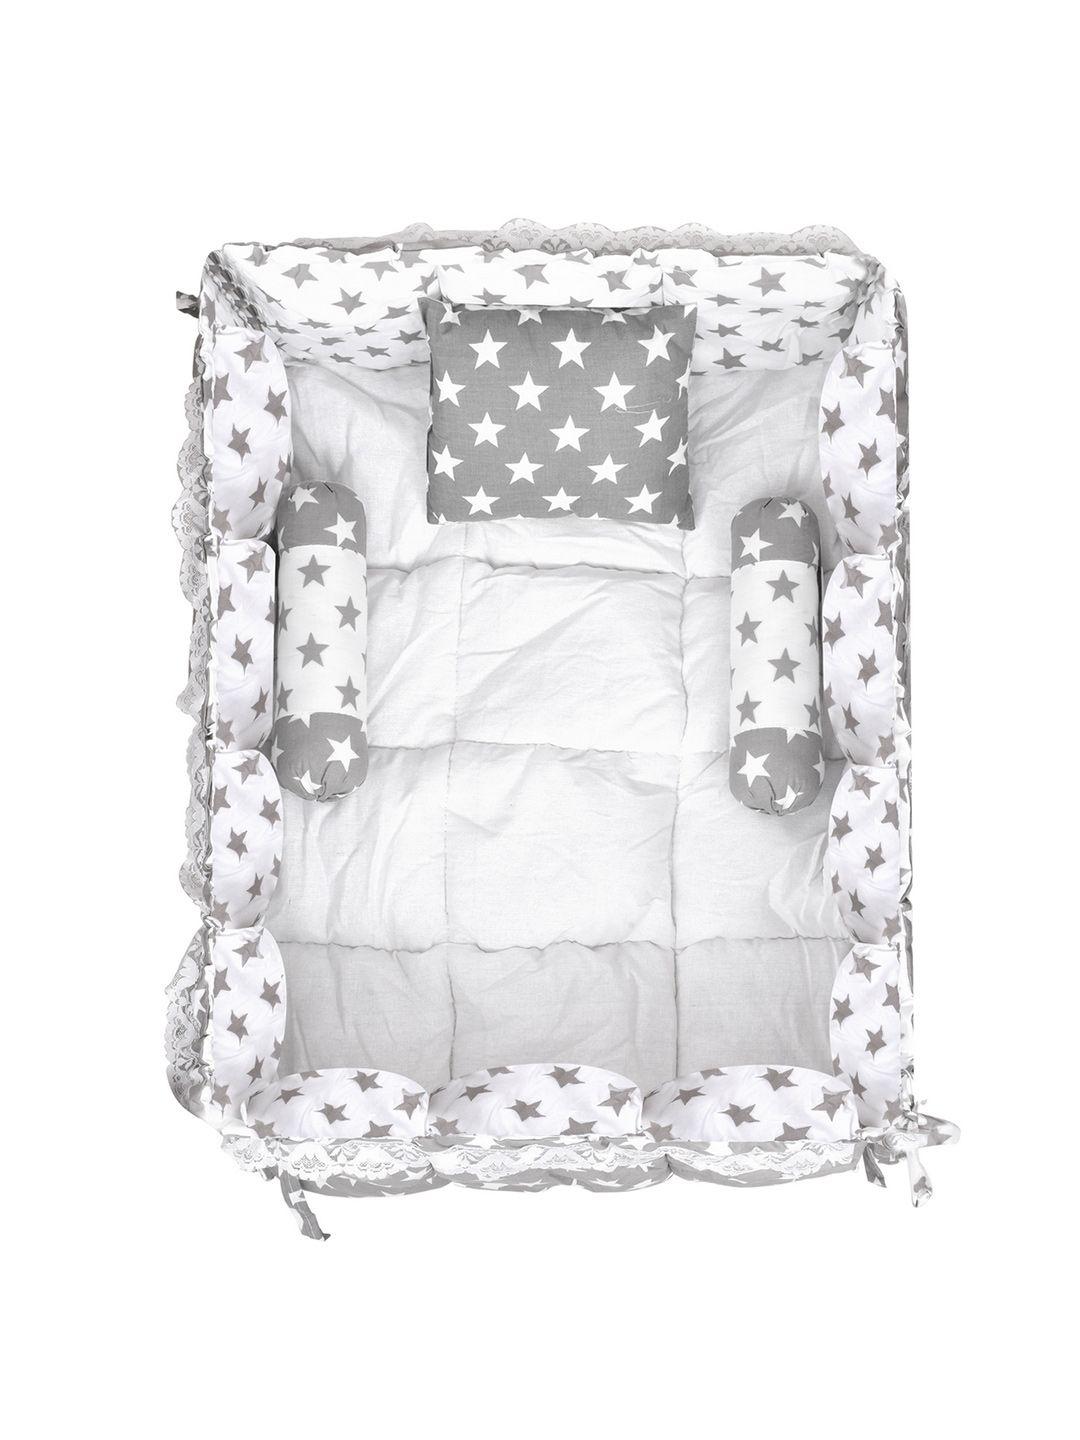 lorem infant kids grey & white printed cotton mattress set with neck pillow & bolsters